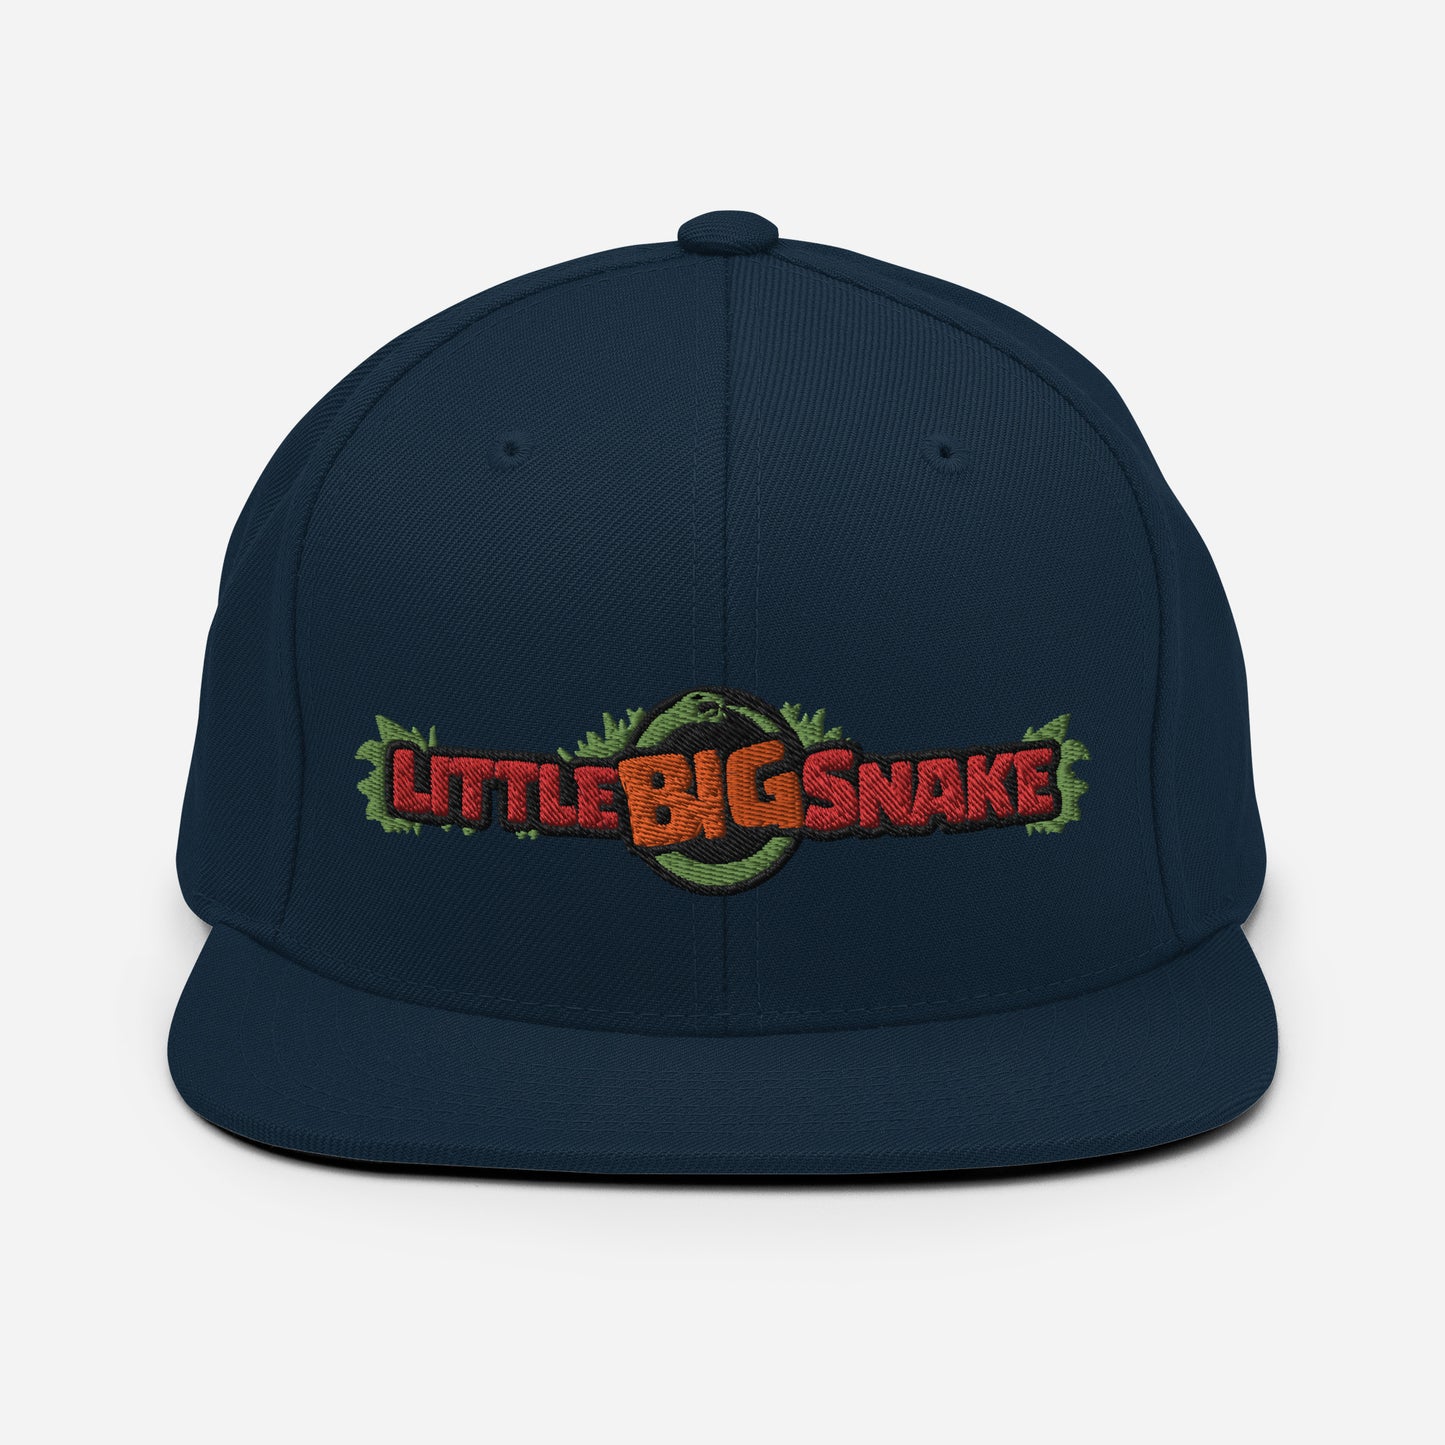 LBS logo snapback hat